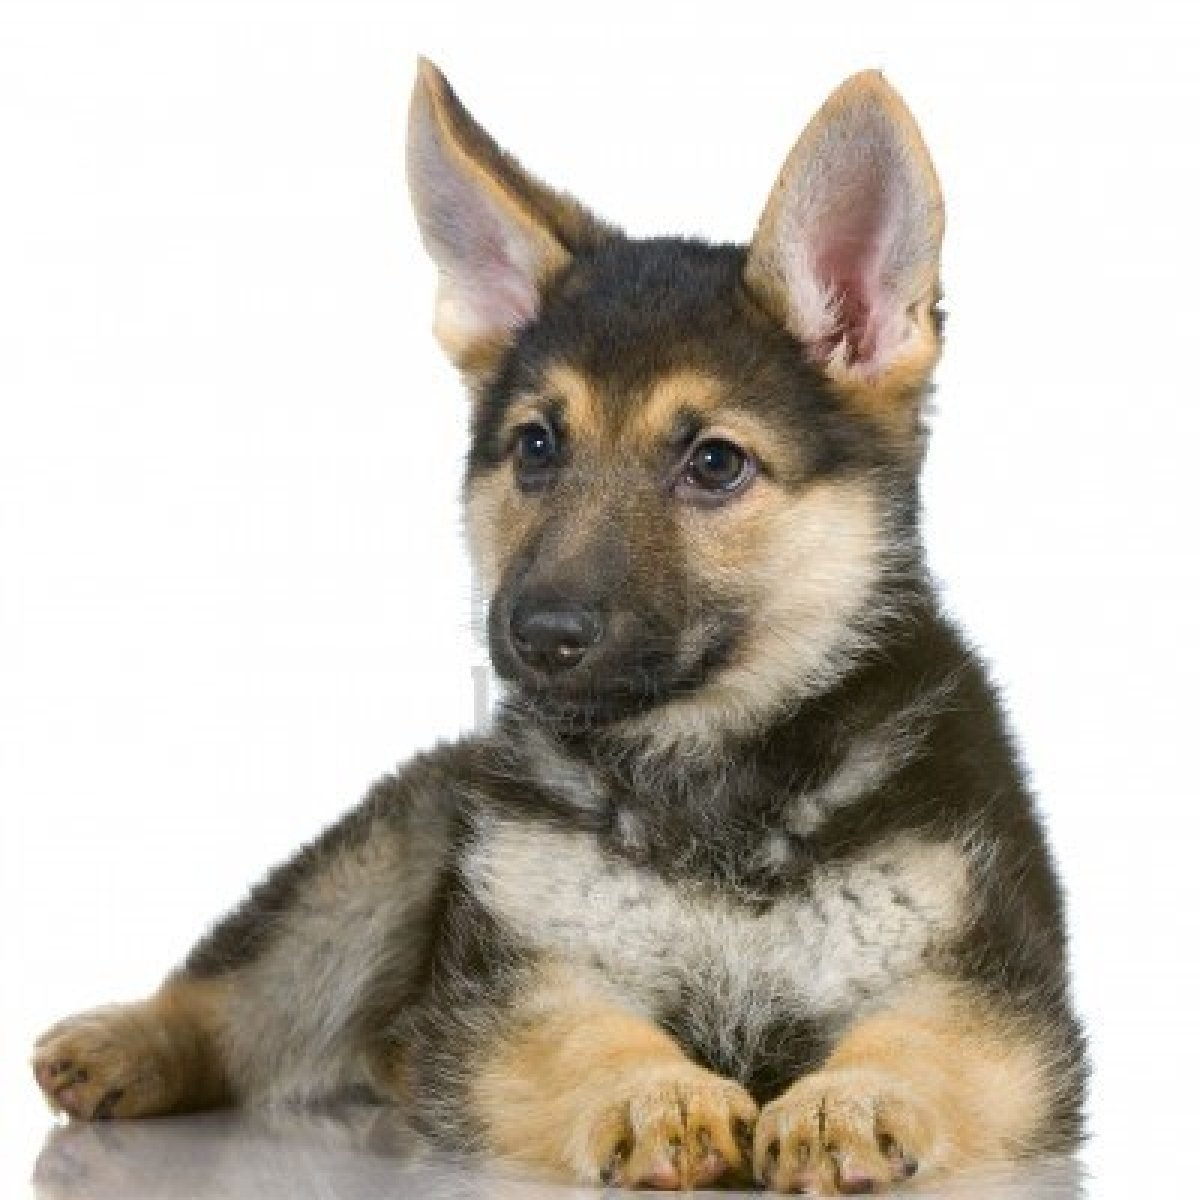 Voorzichtigheid Adolescent Stijg Hondenrassen website en hondenforum | Honden & Hondenrassen